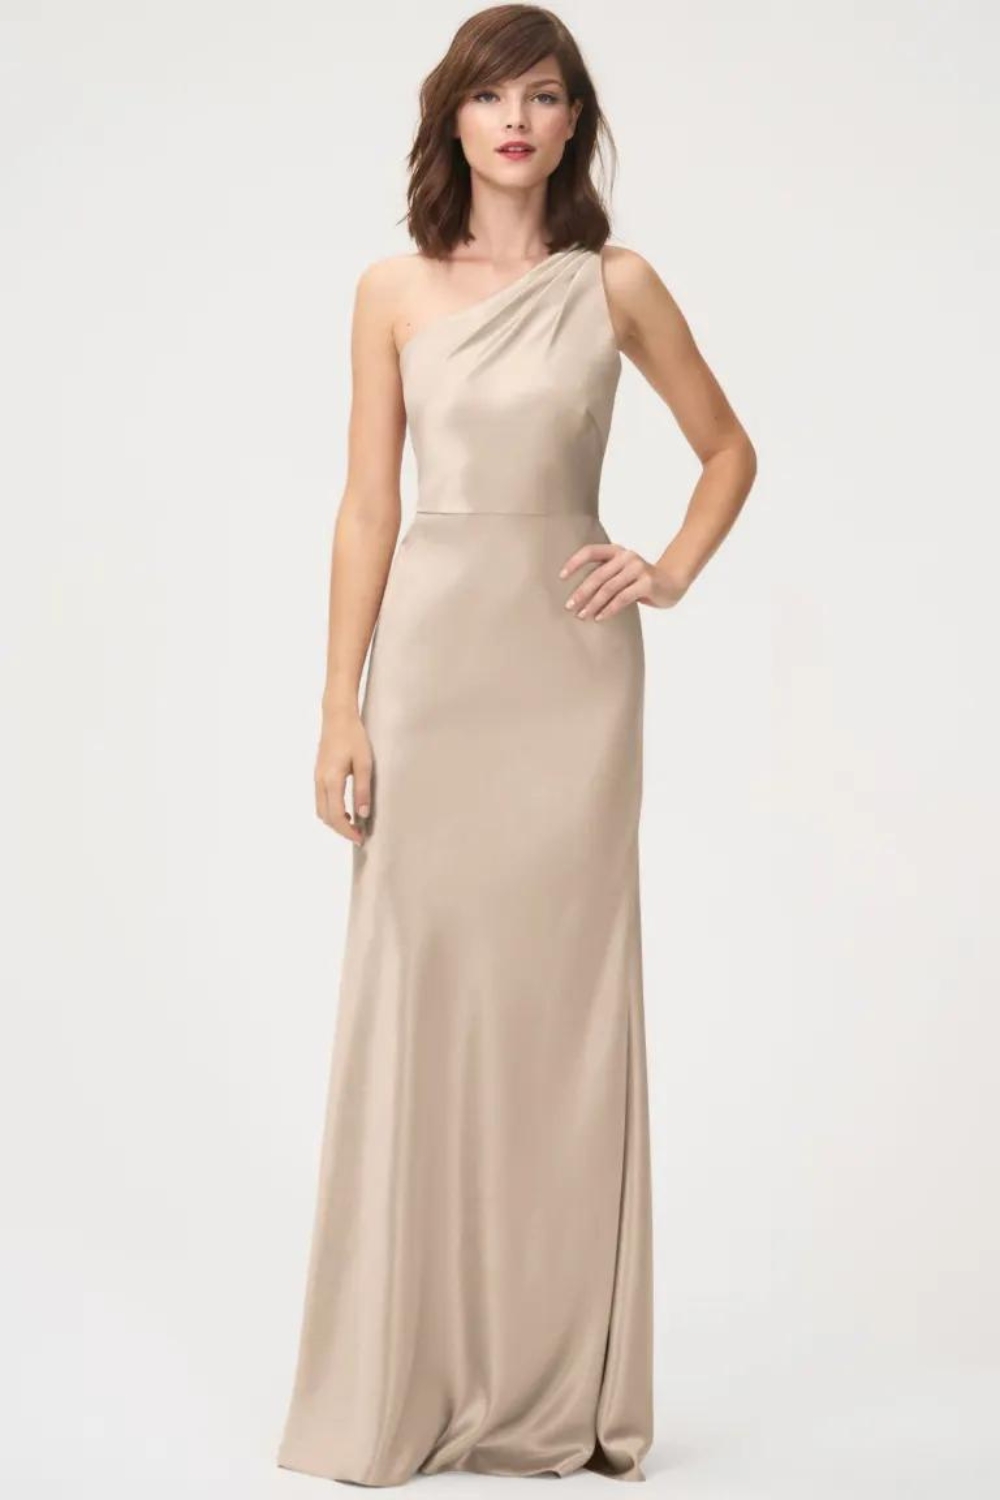 Try Before You Buy Lena Bridesmaid Dress by Jenny Yoo